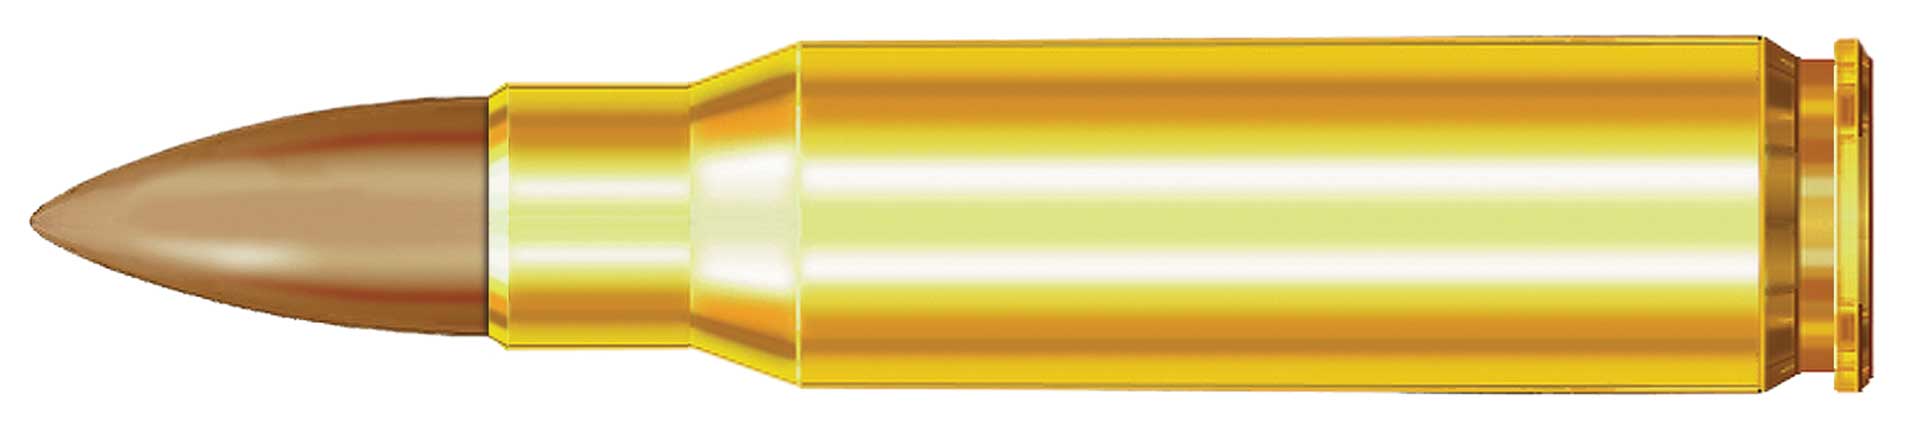 6.8 SPC Special Purpose Cartridge bullet brass rendering drawing digital art ammunition